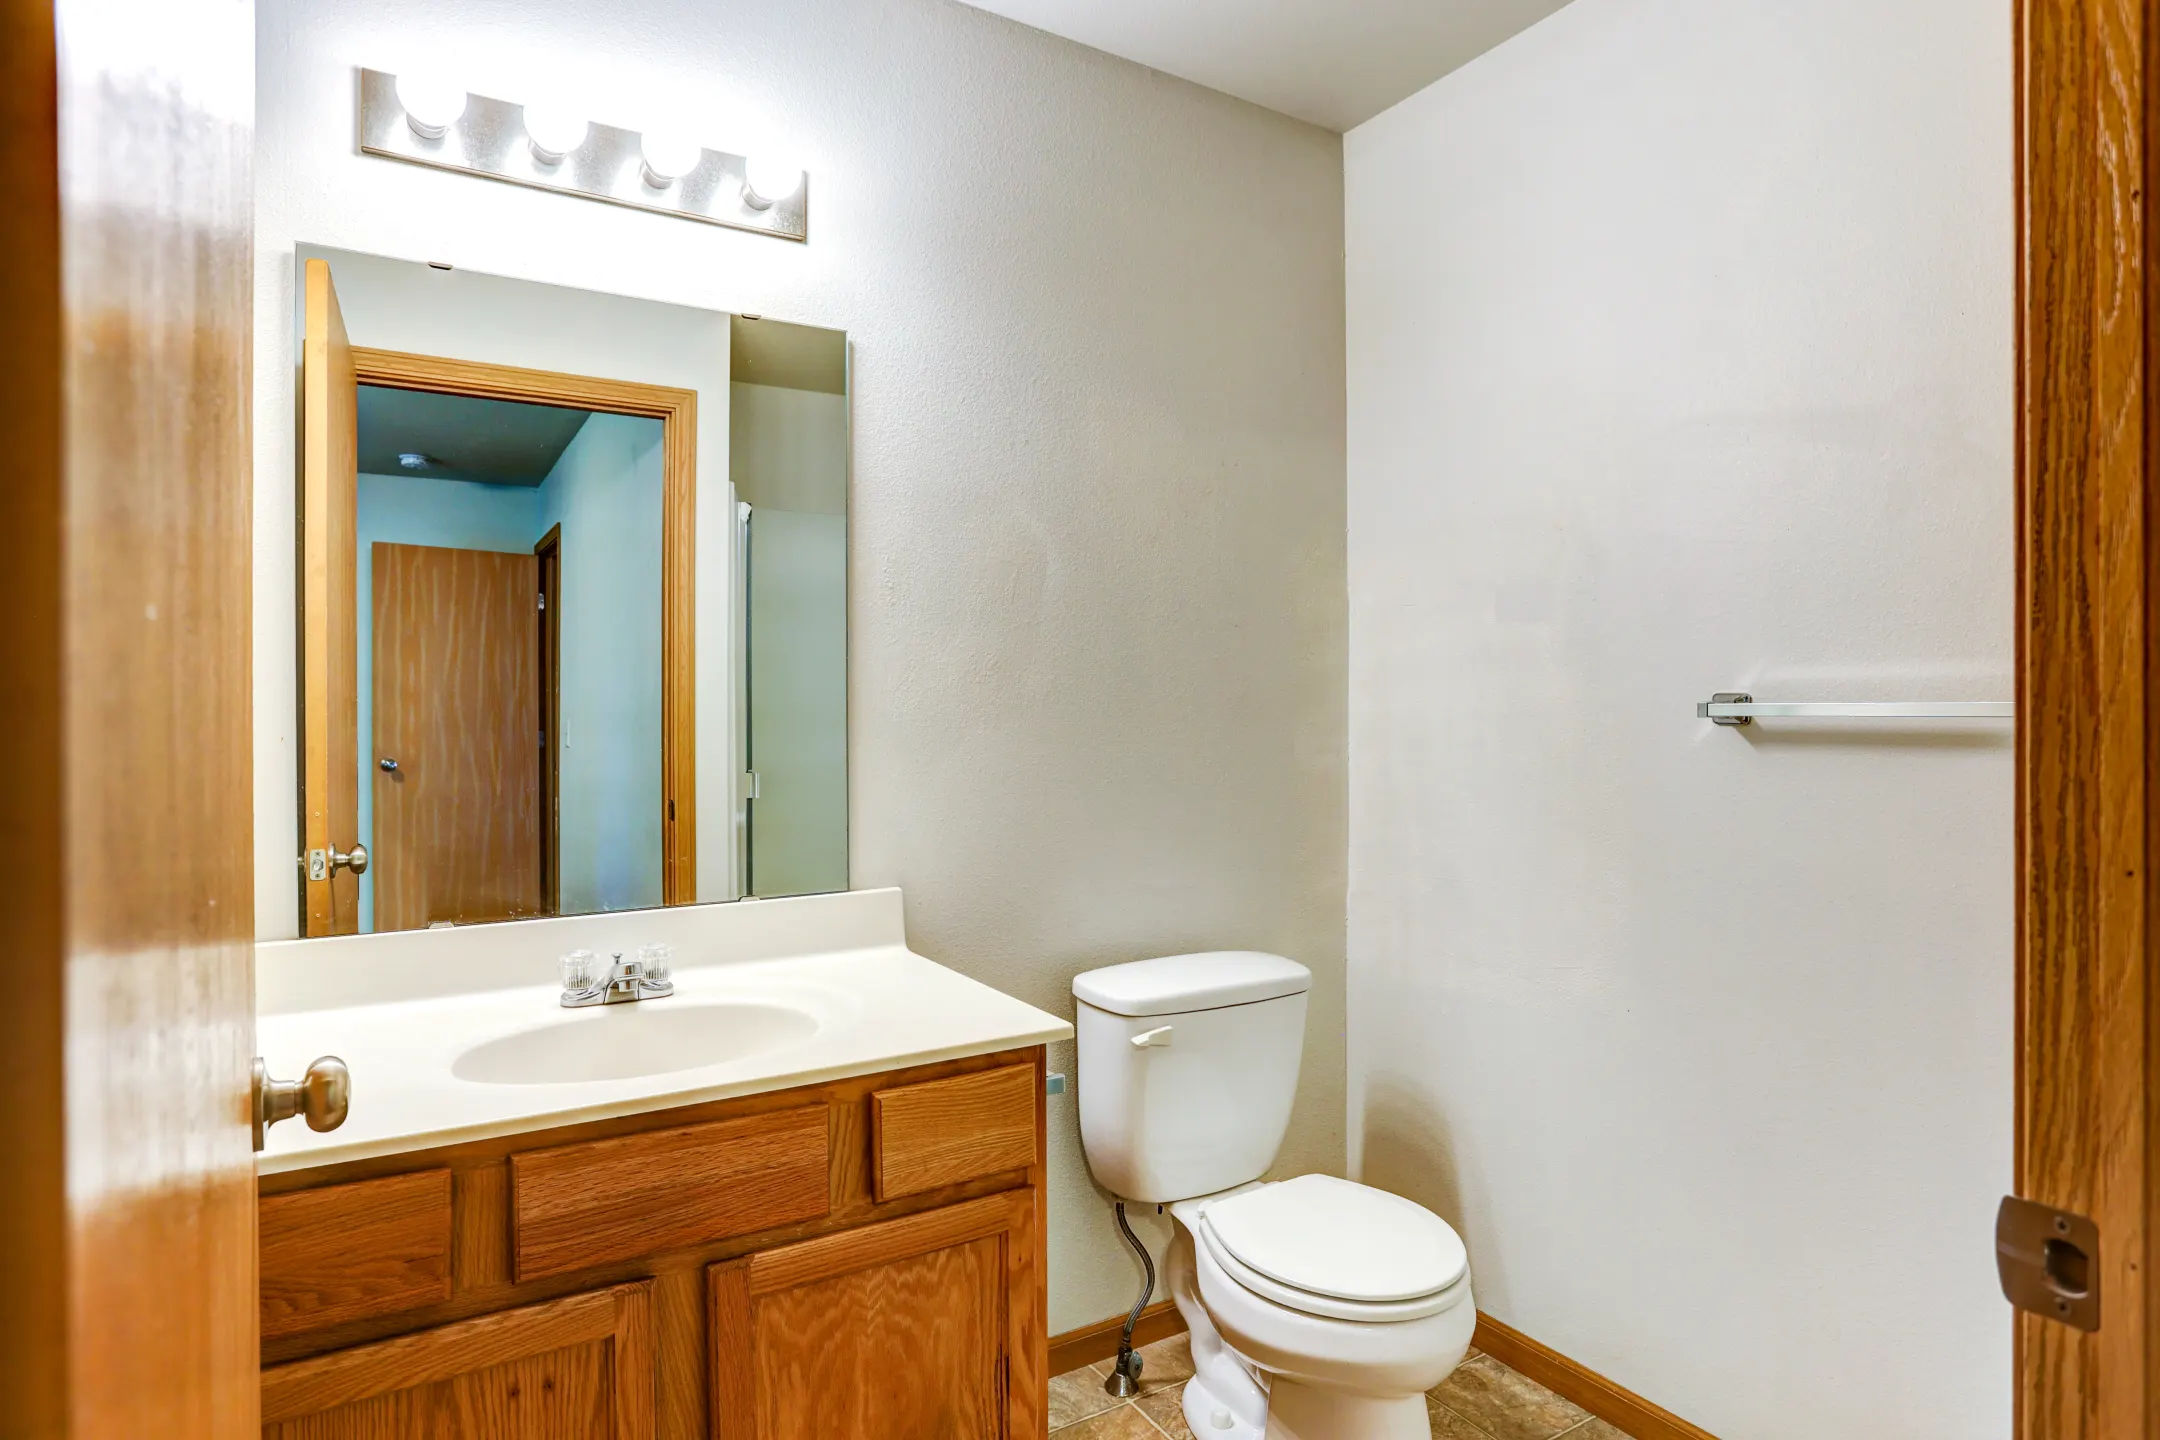 Bathroom - Conifer Creek Townhomes - Allendale, MI